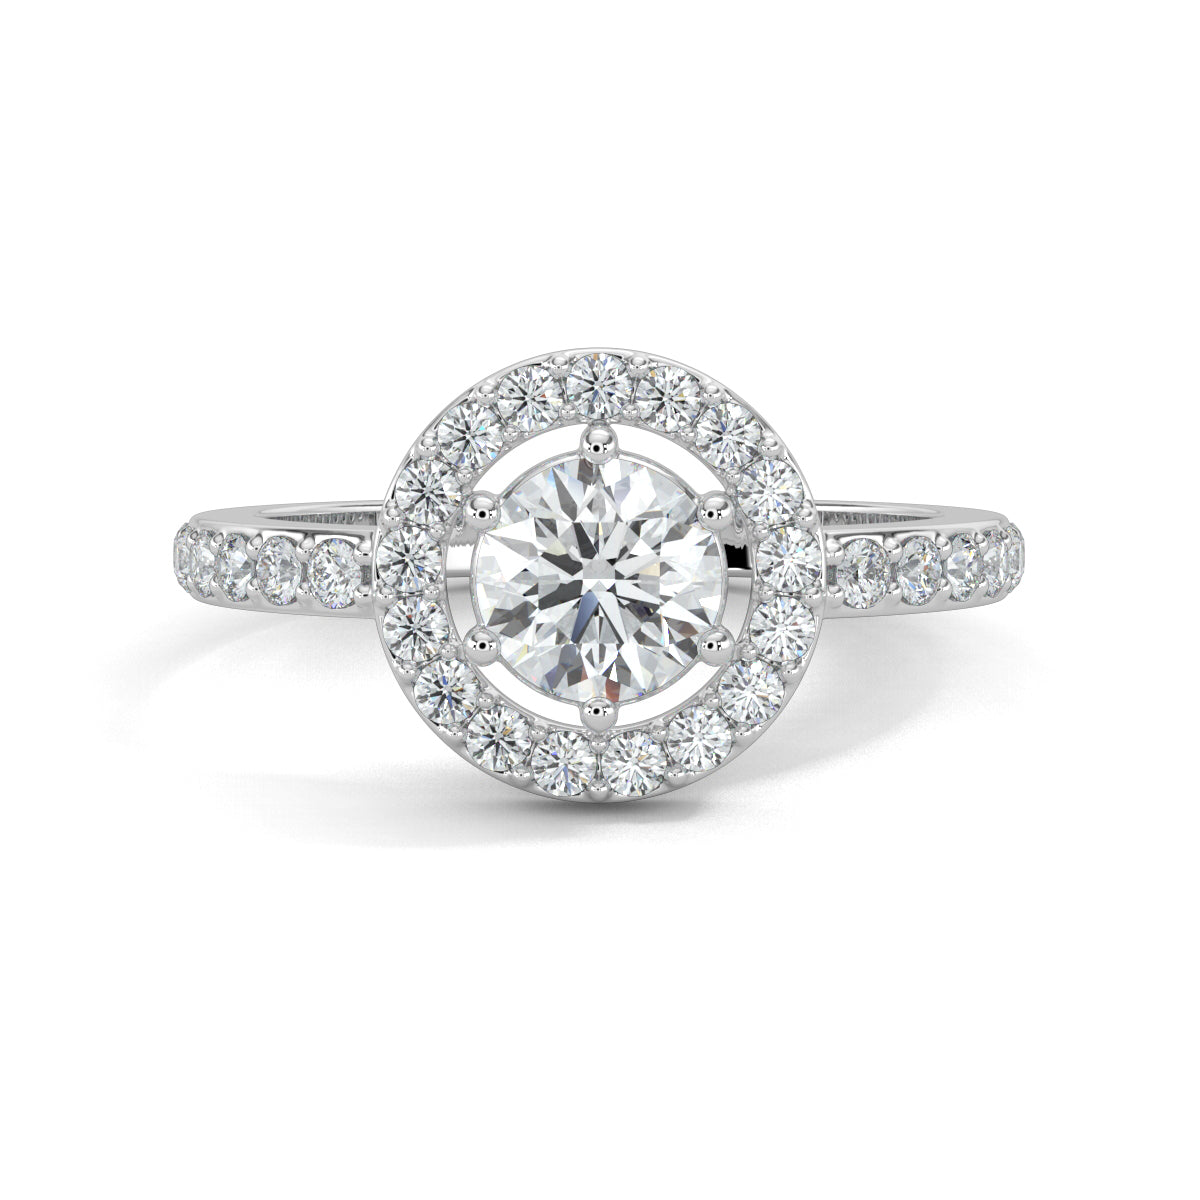 White Gold, Diamond Ring, natural diamond ring, lab-grown diamond ring, Everyday diamond ring, round diamond ring, halo setting, pave-set diamonds, elegant diamond ring, classic jewelry